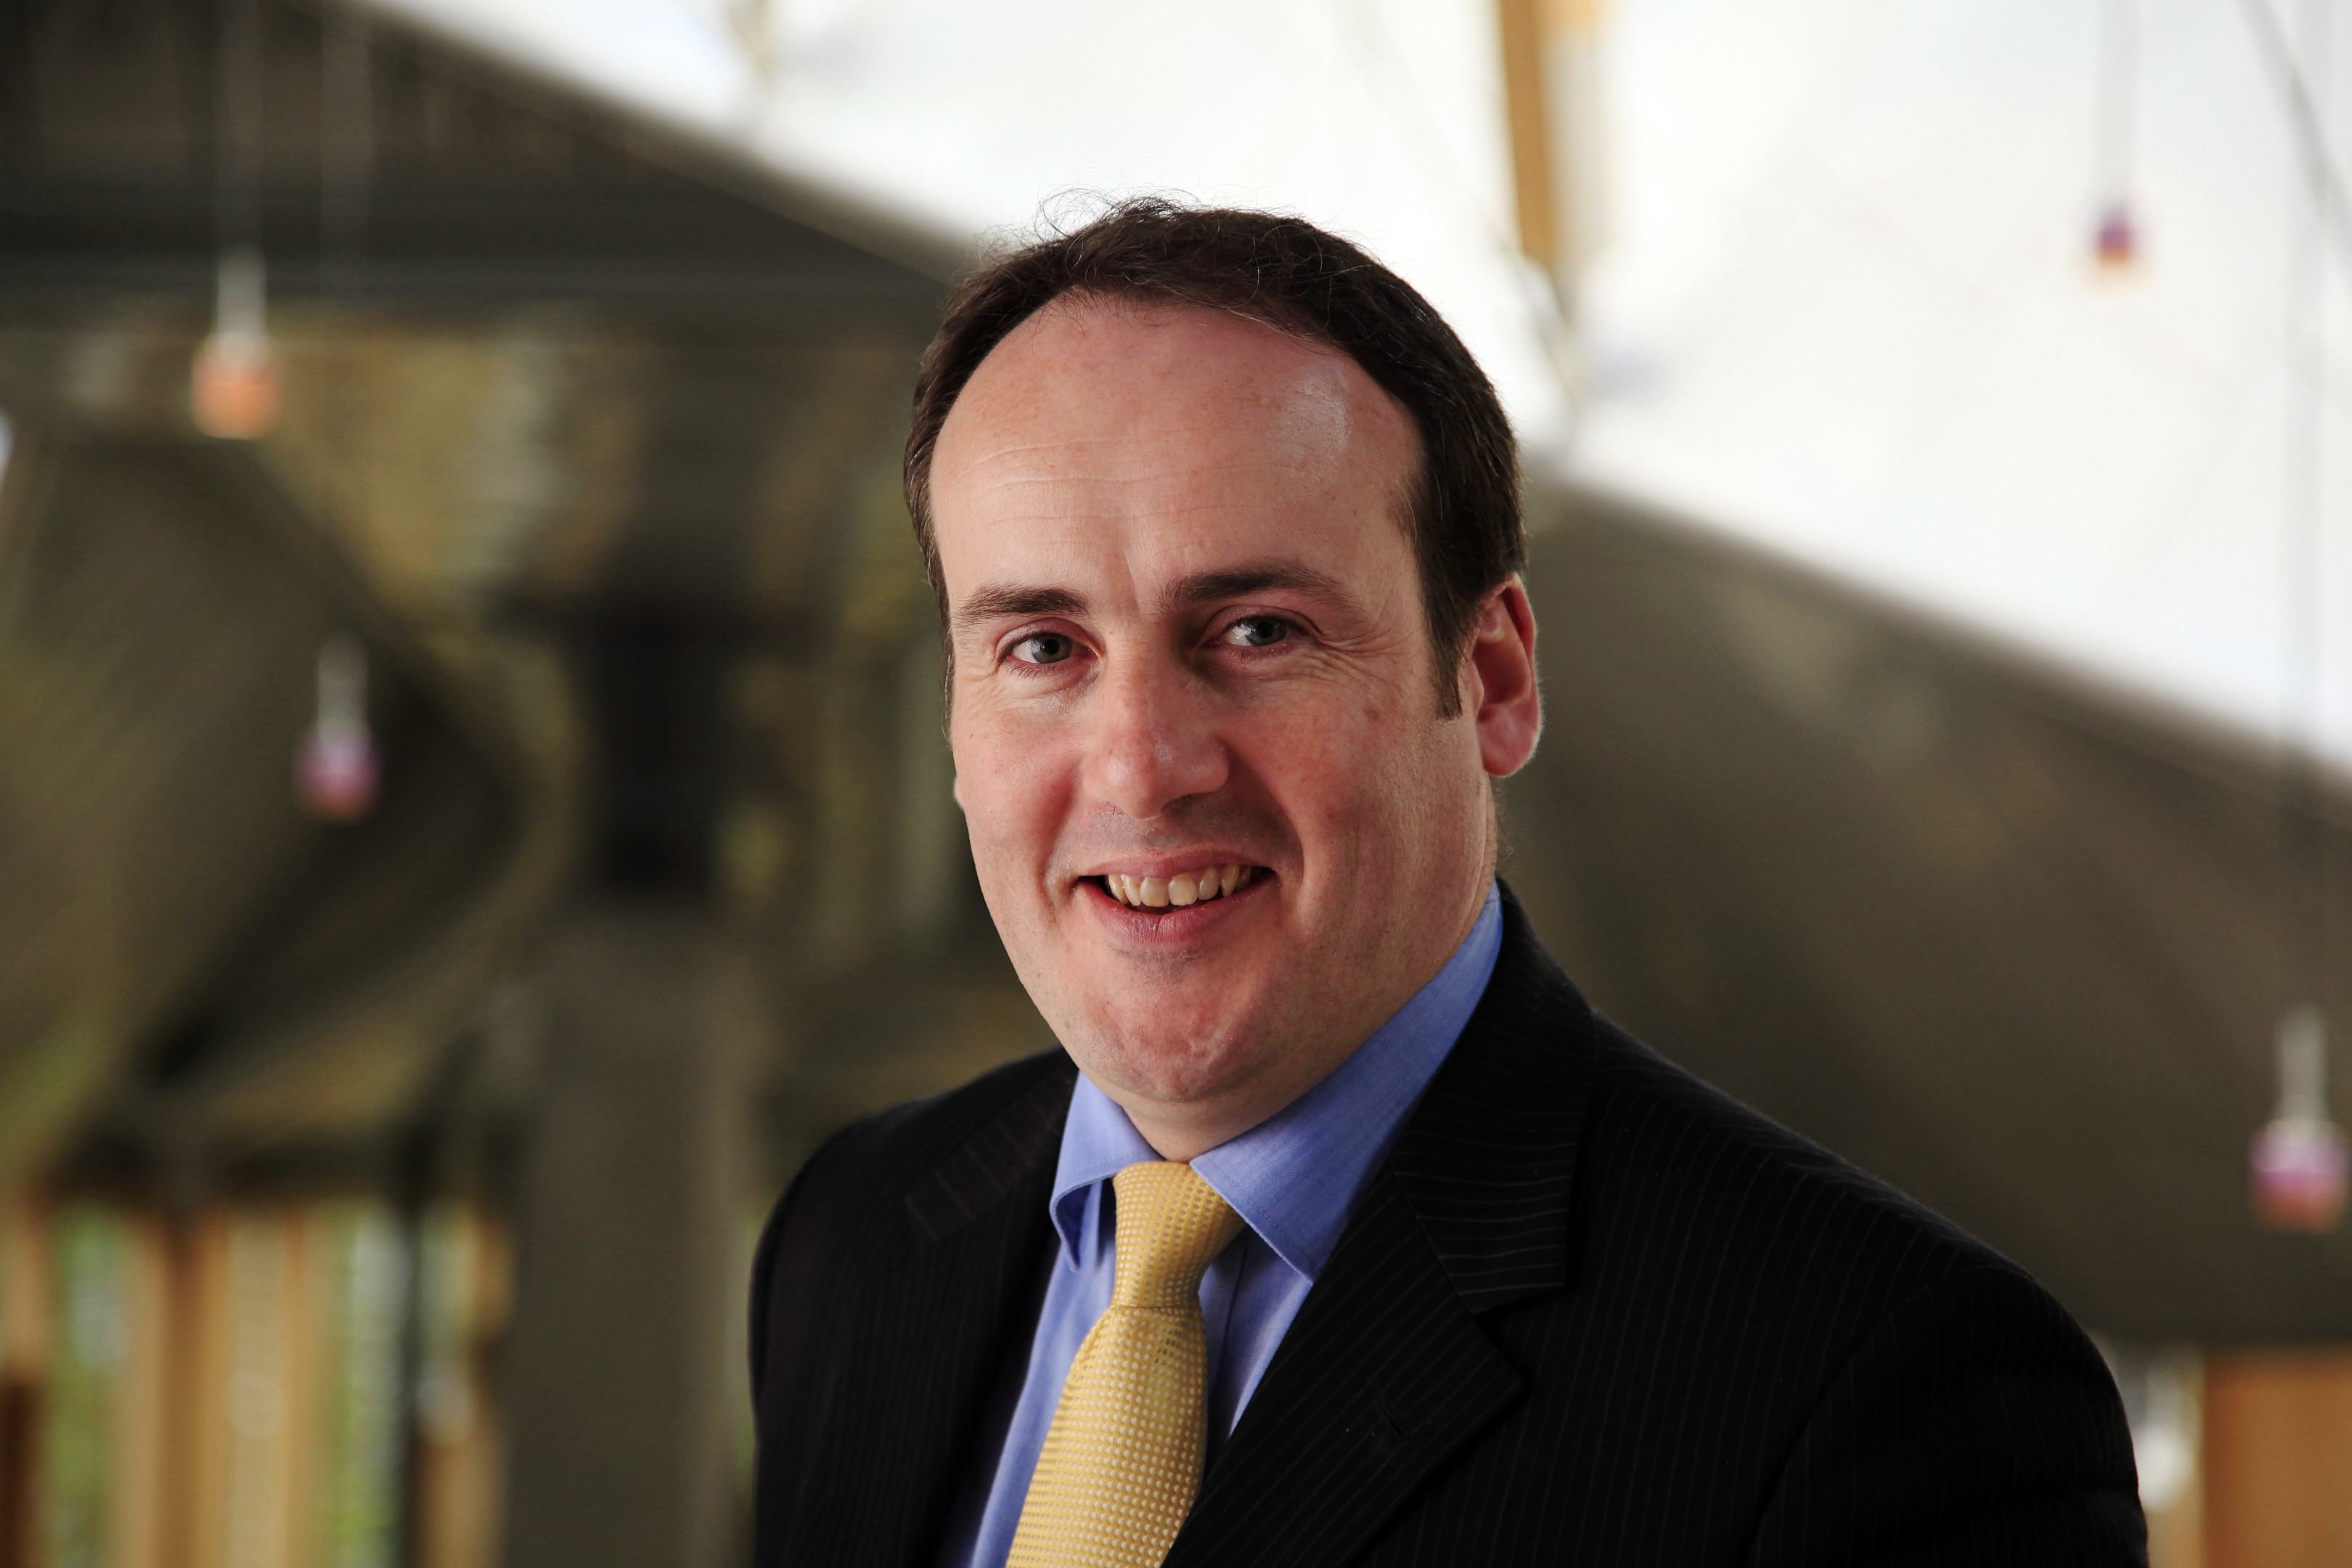 Energy Minister Paul Wheelhouse MSP (Andrew Cowan/Scottish Parliament)